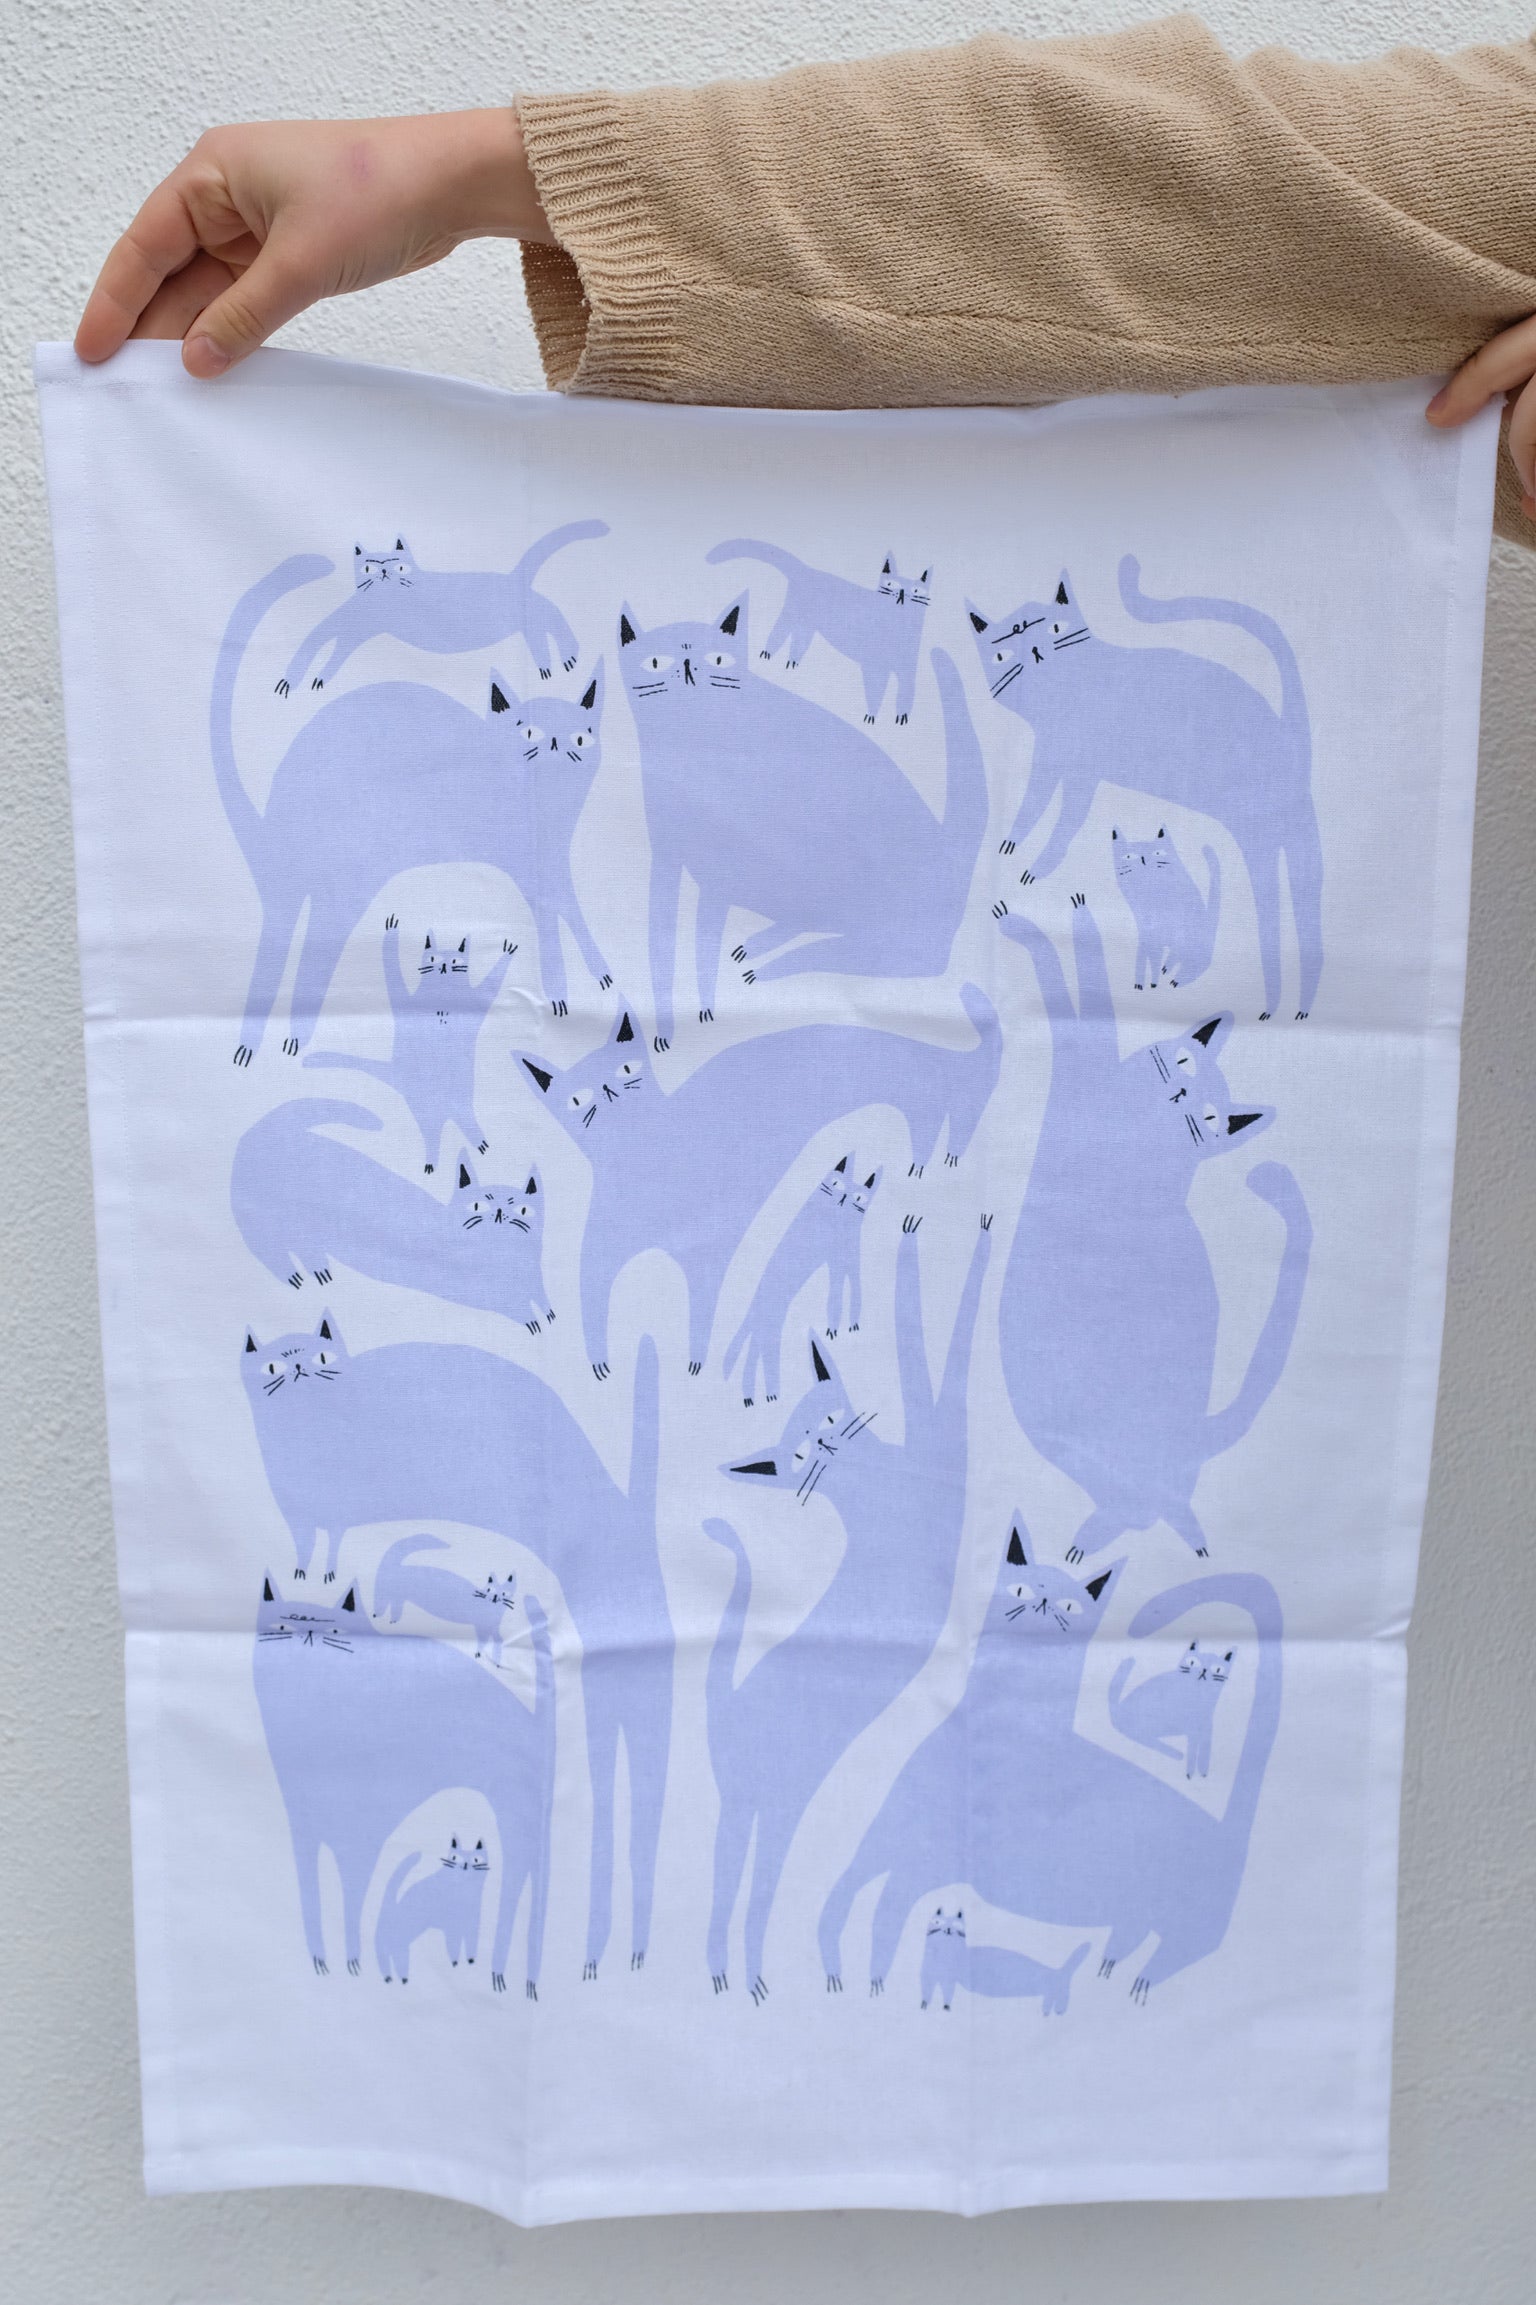 Badger &amp; Burke Tea Towel / Lavender Cats